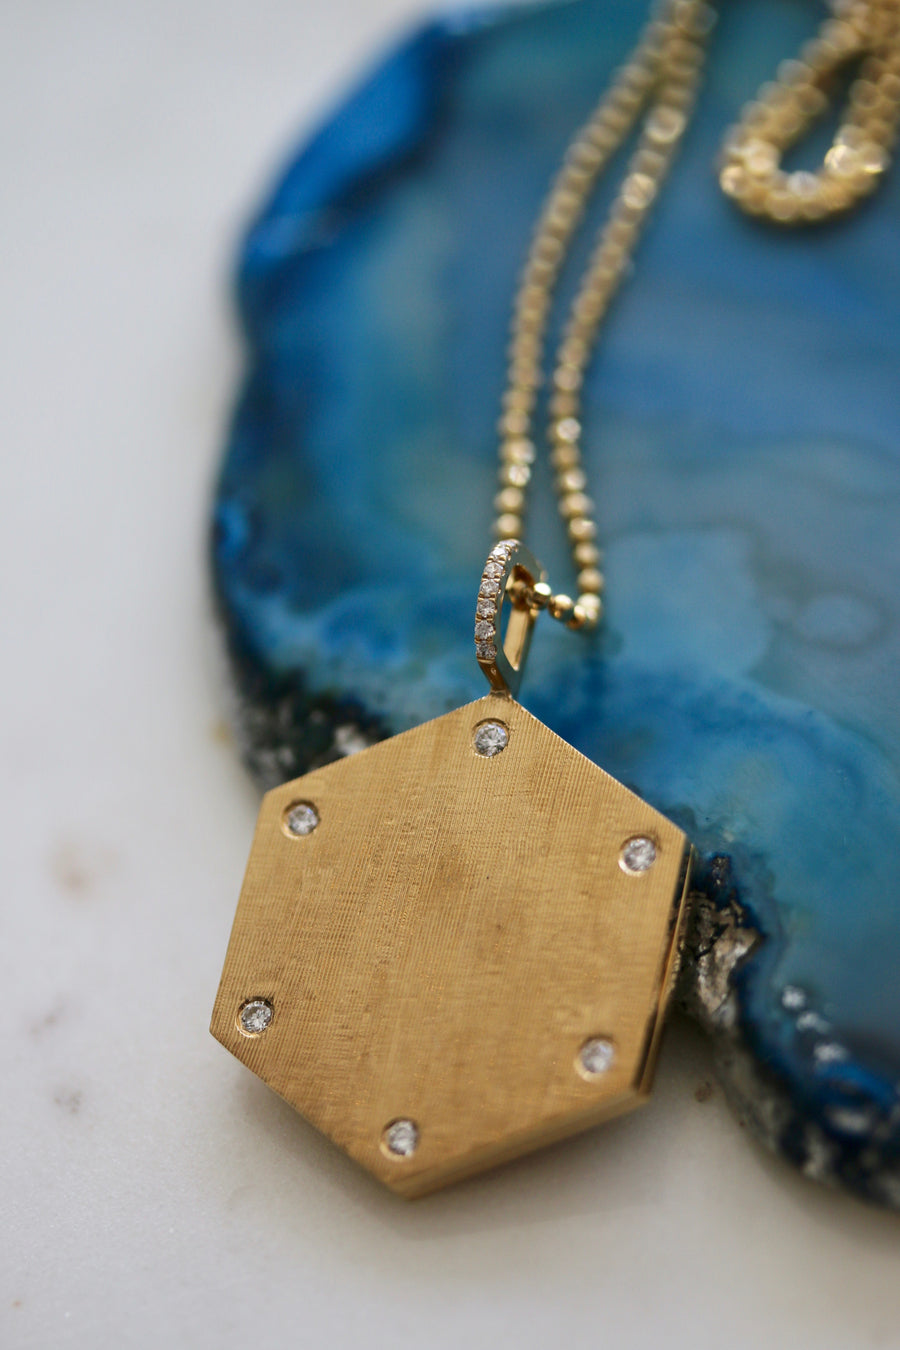 18k gold locket necklace with diamonds